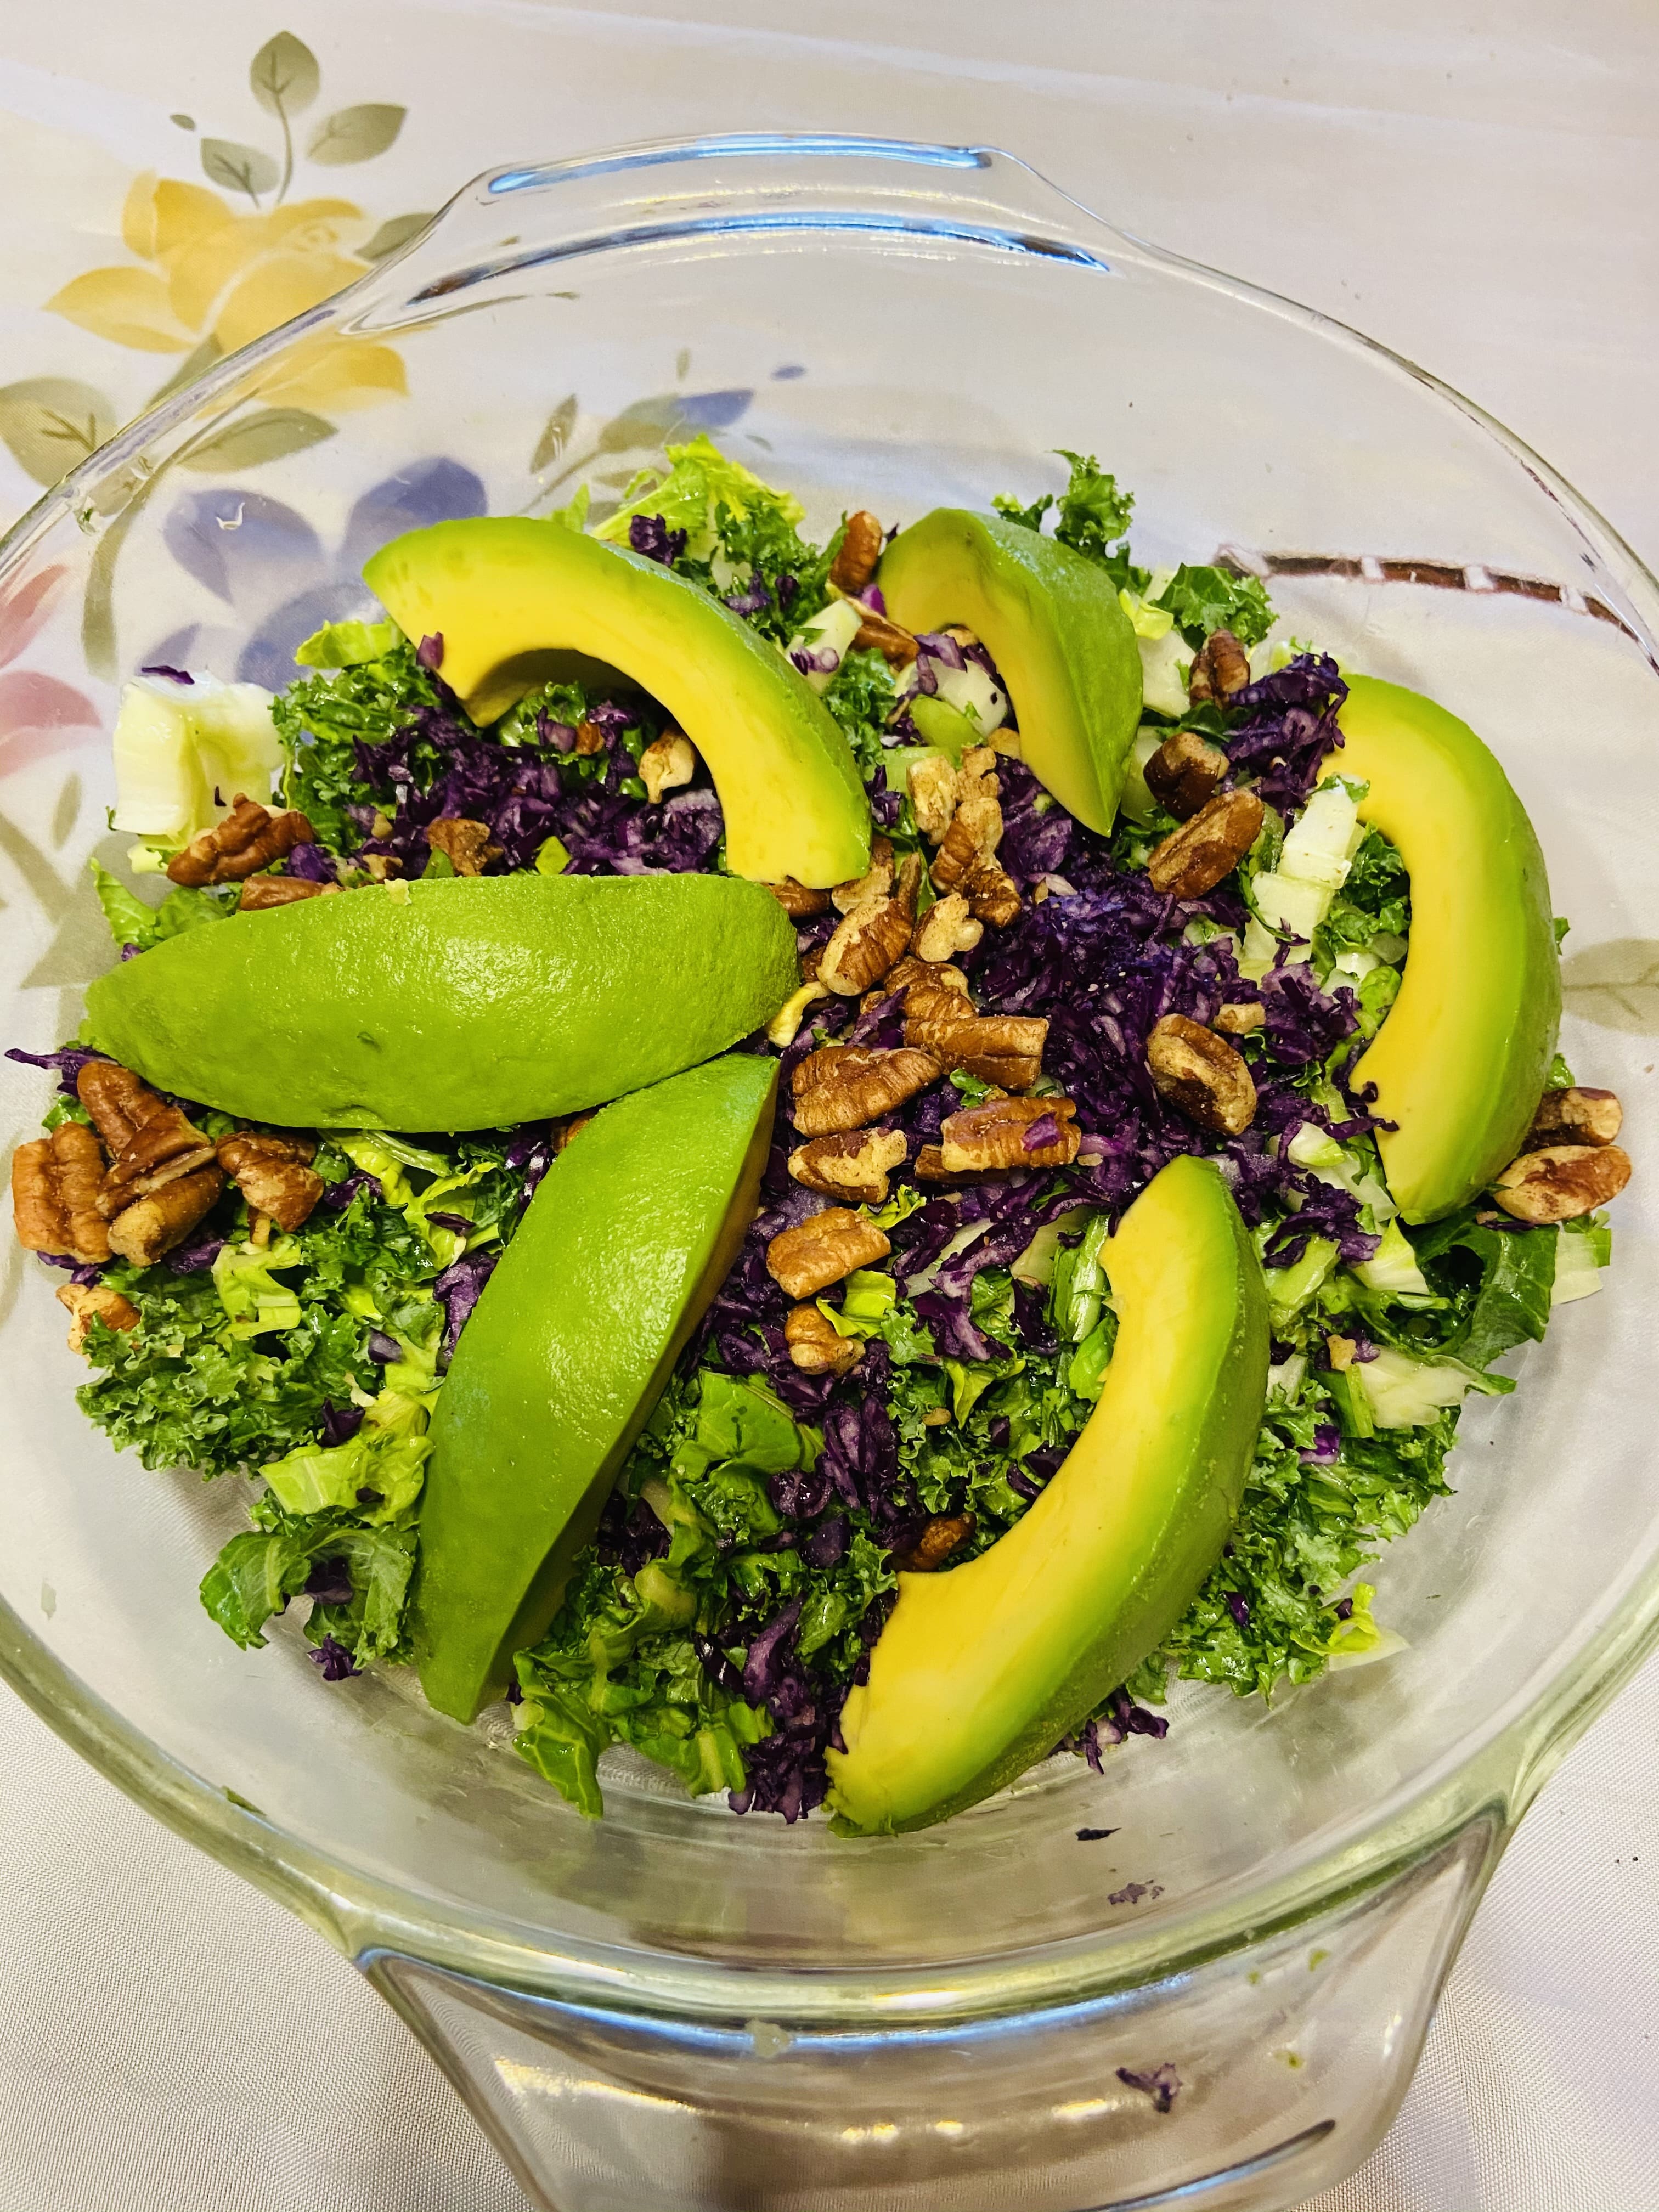 Tasty Kale with Avocado Salad